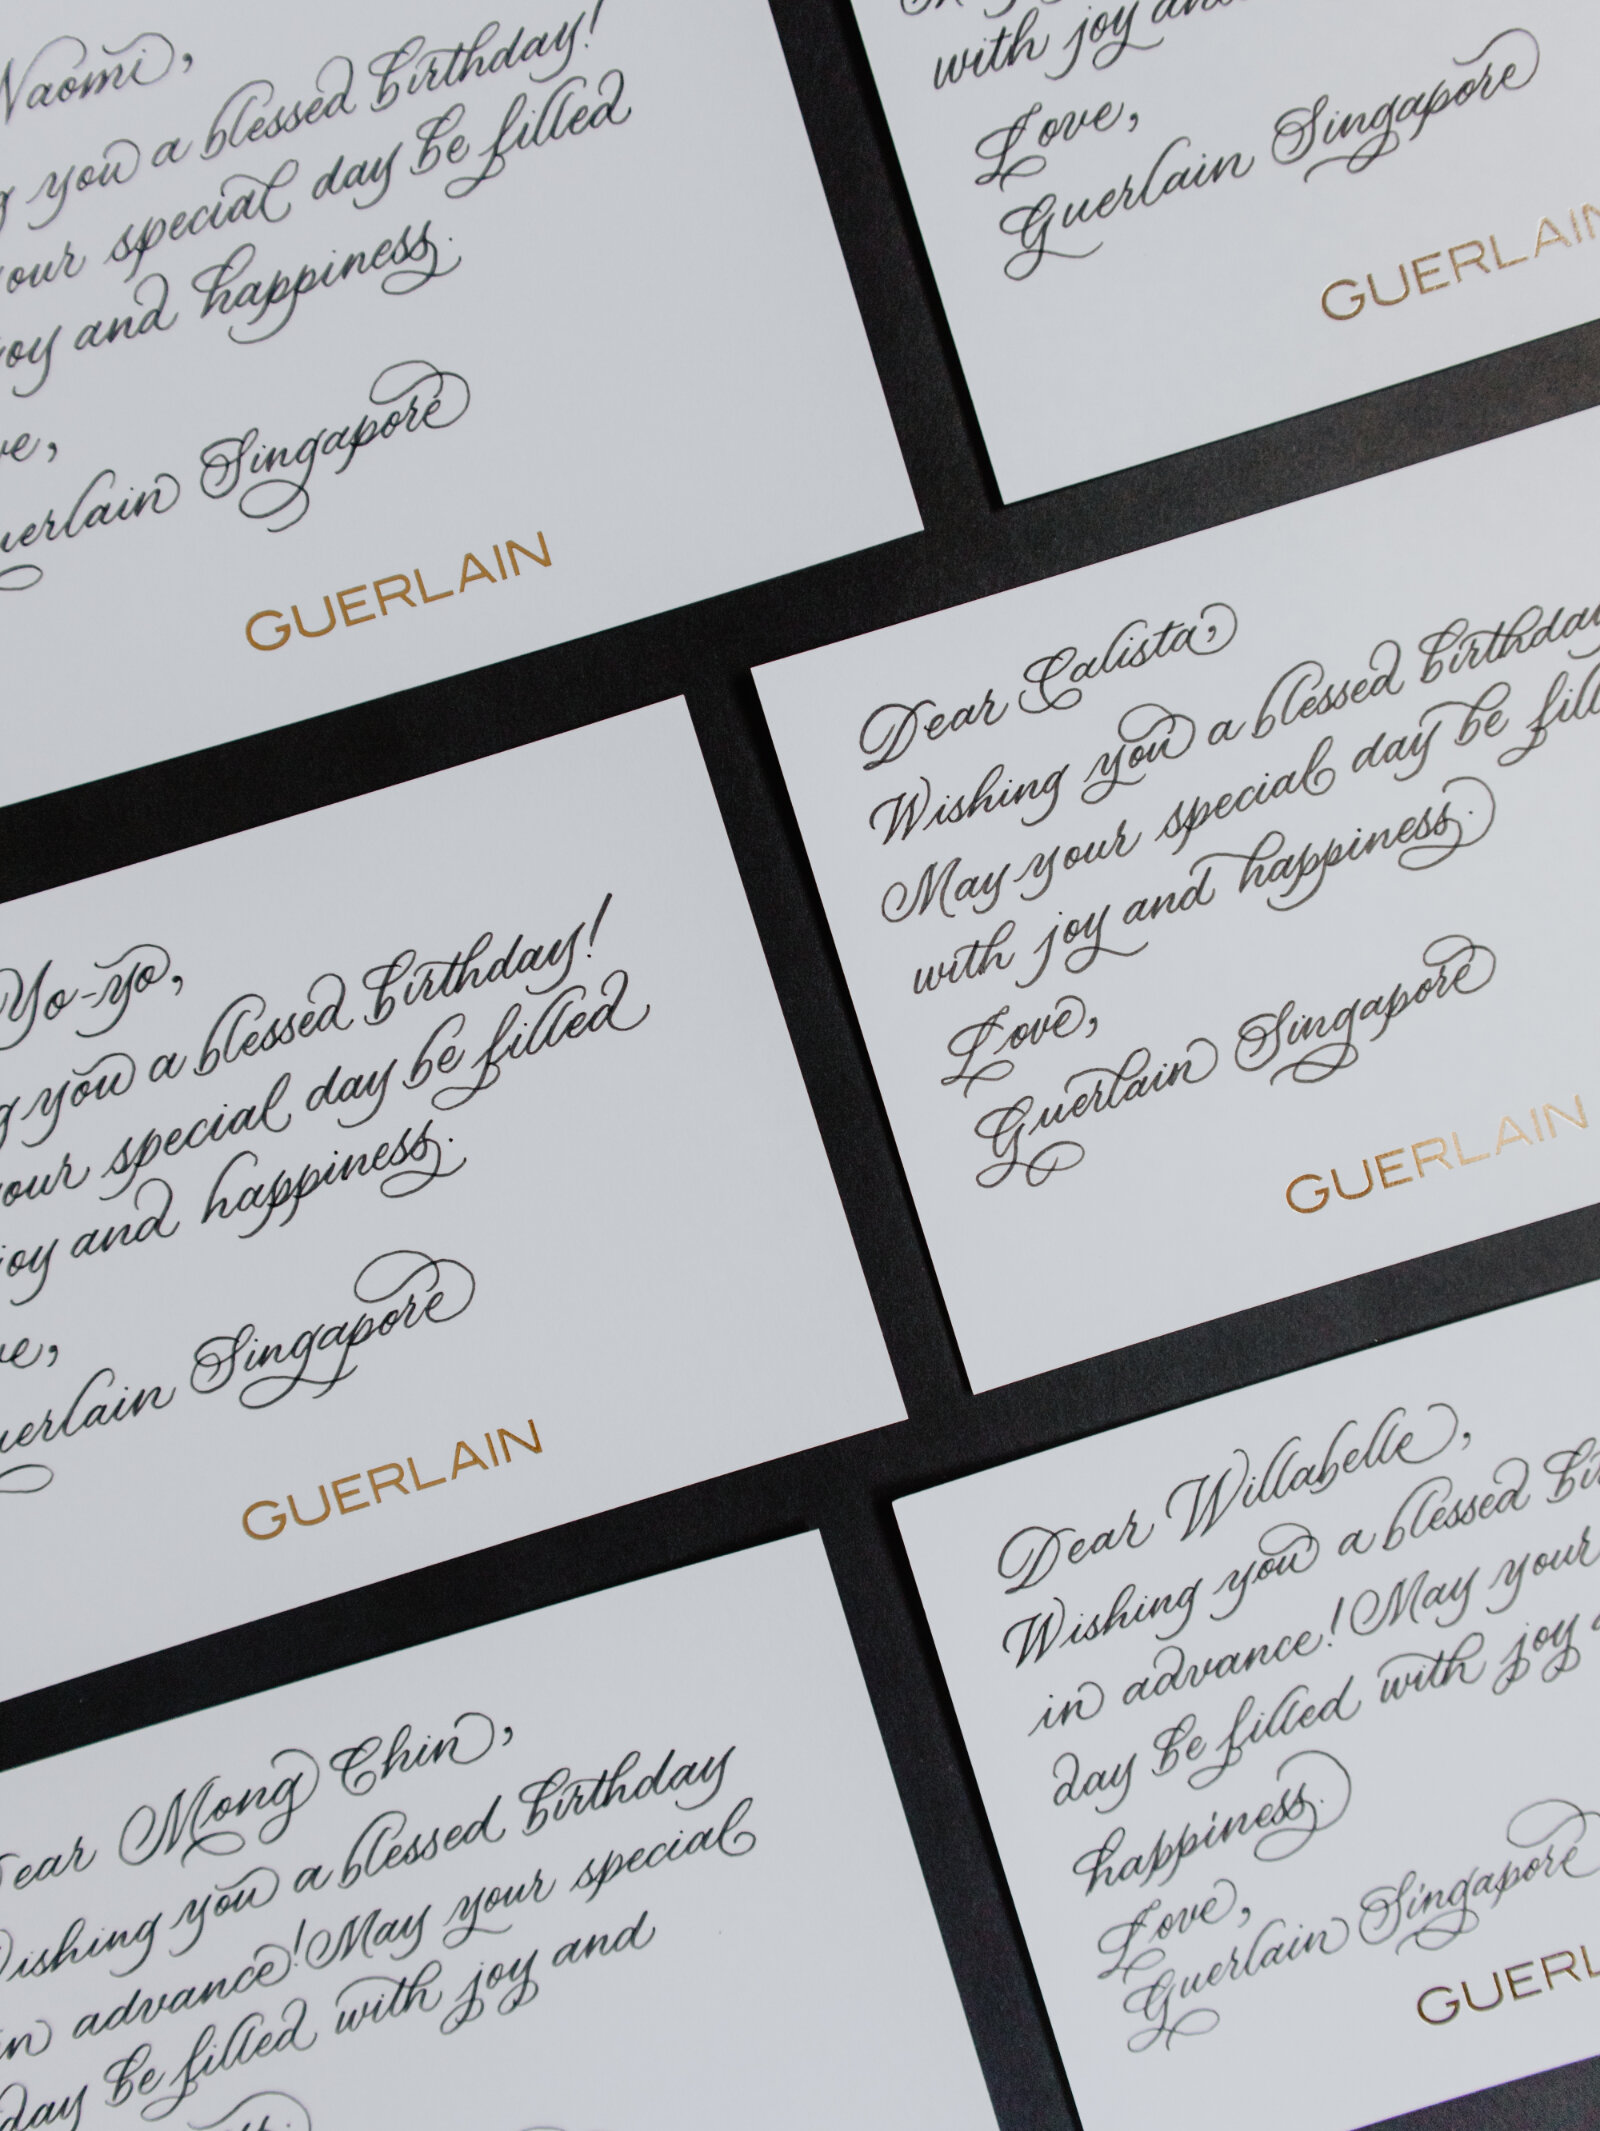 Guerlain Singapore - Custom Calligraphy on Cards - Press Letters - Leah Design - Singapore Calligrapher4.jpg